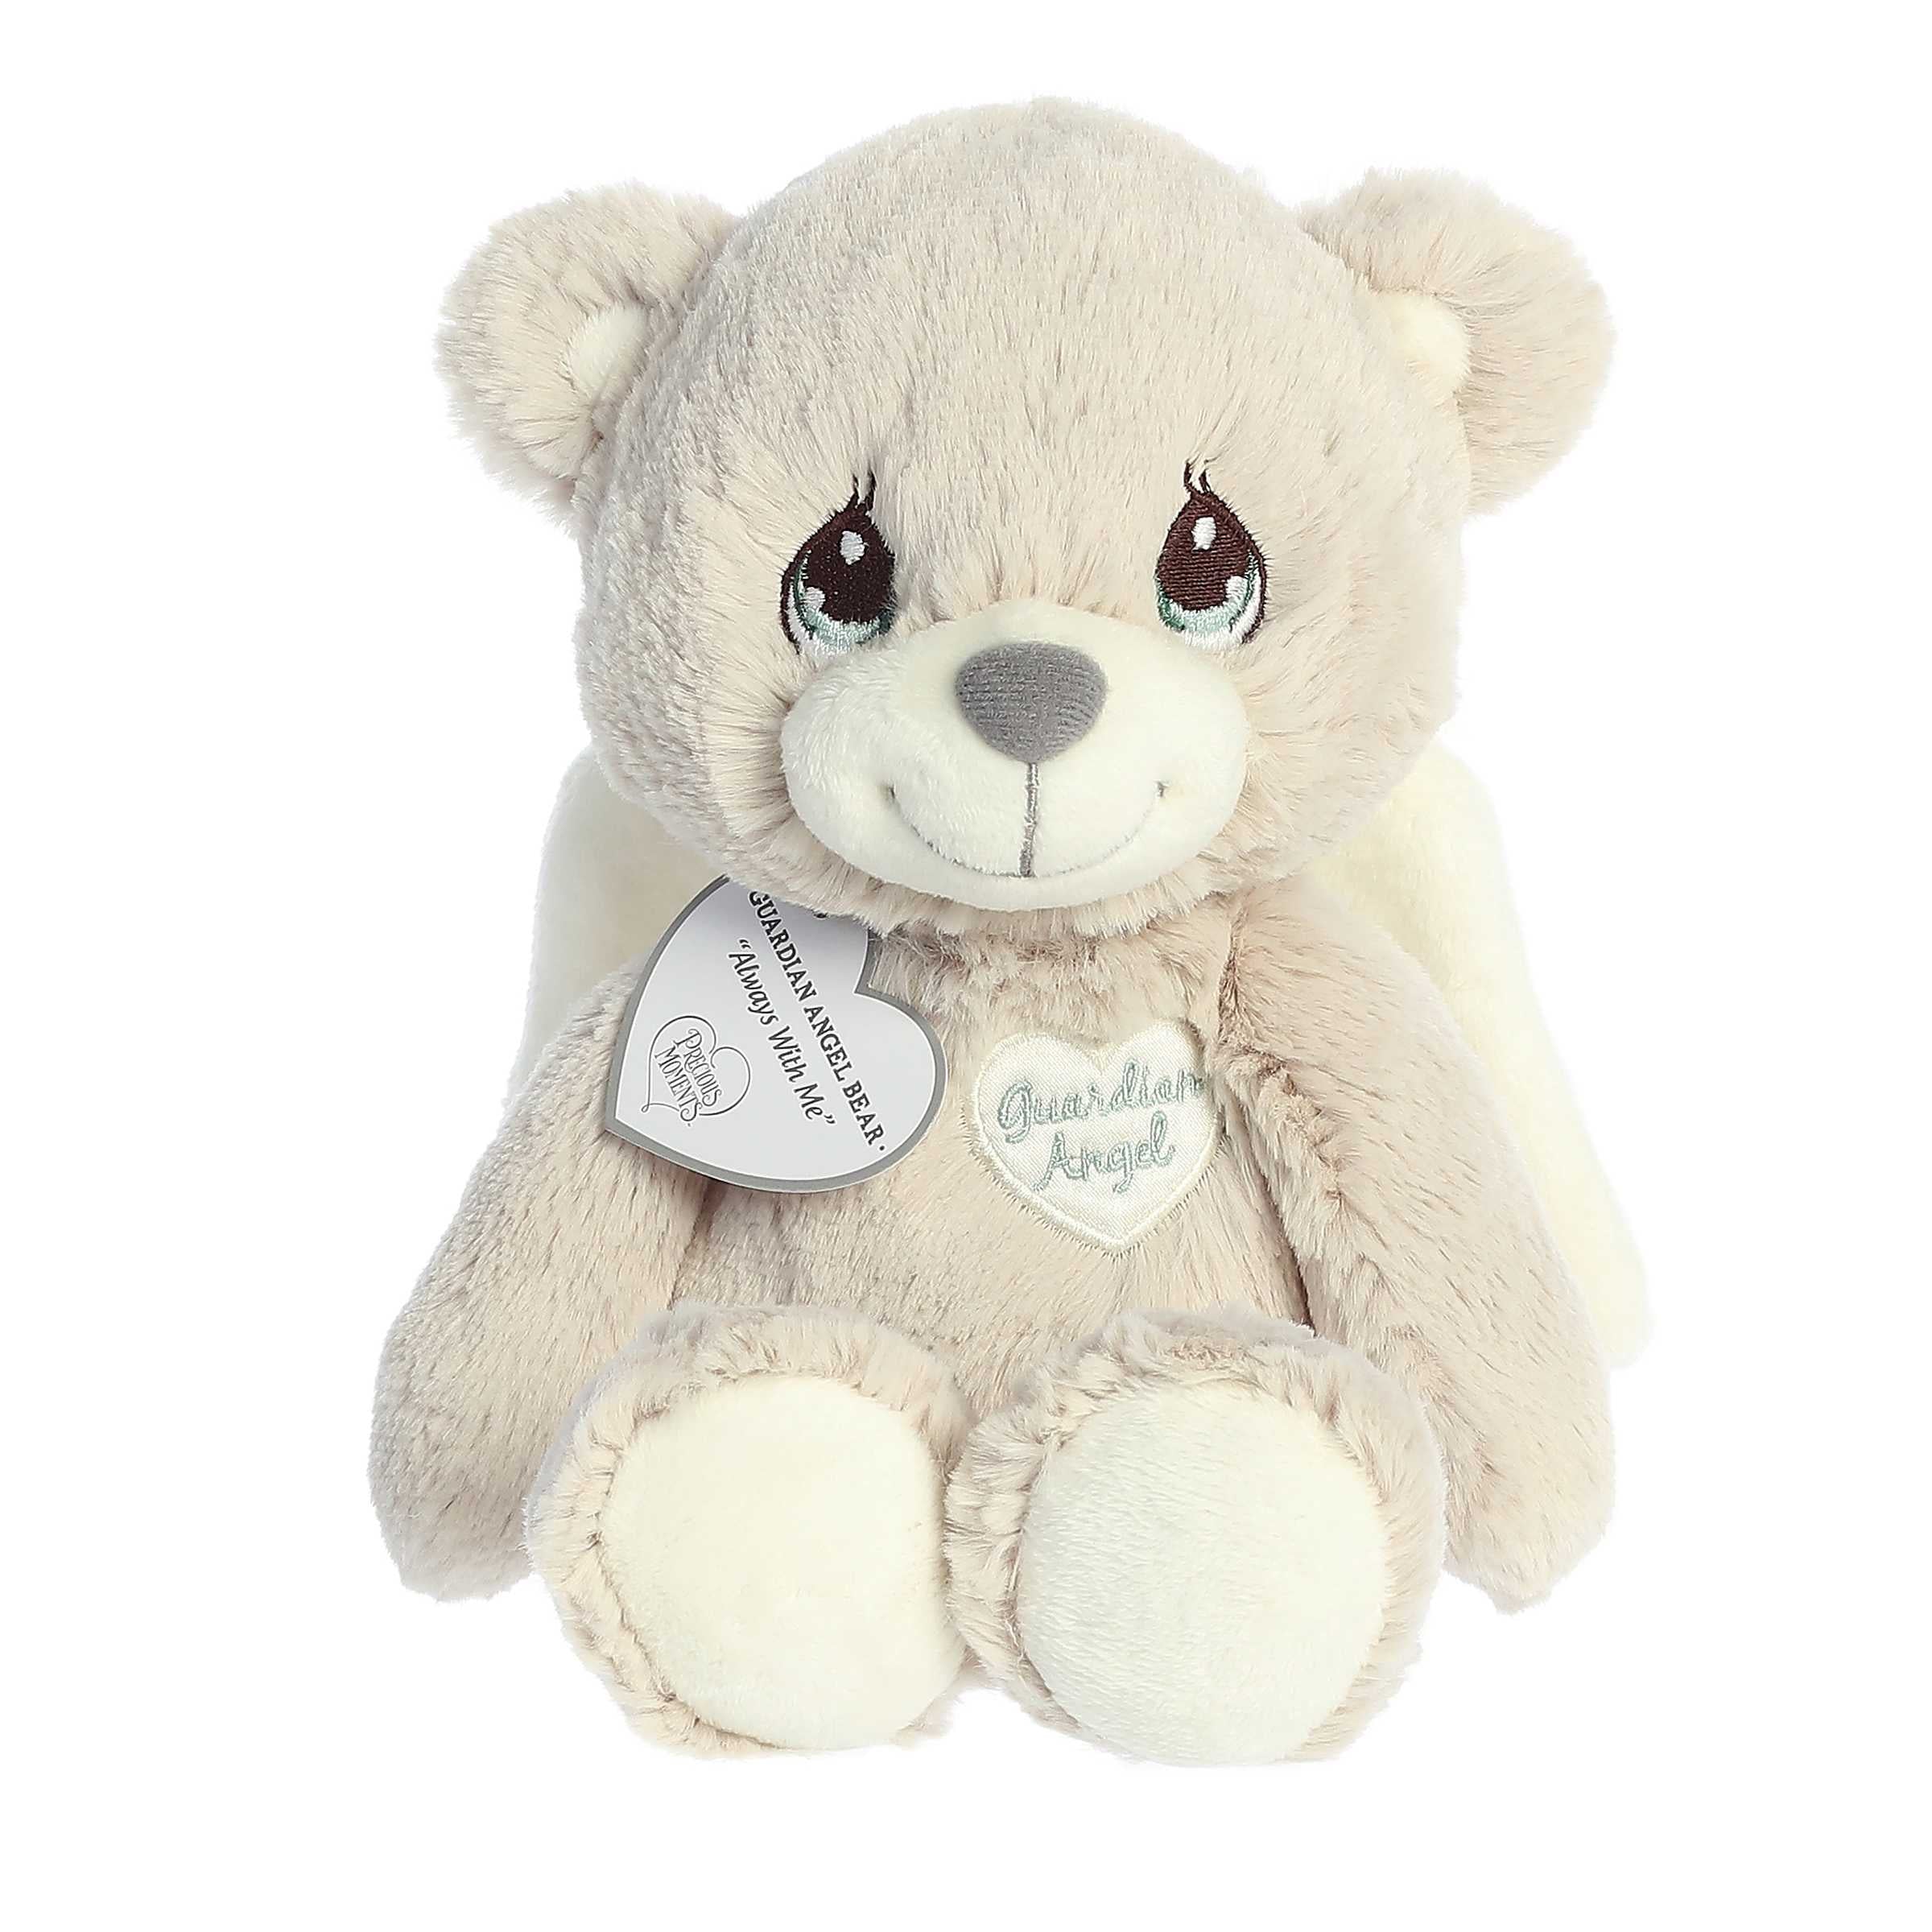 Light beige teddy bear stuffed animal with angel wings and sweet sleepy embroidered eyes